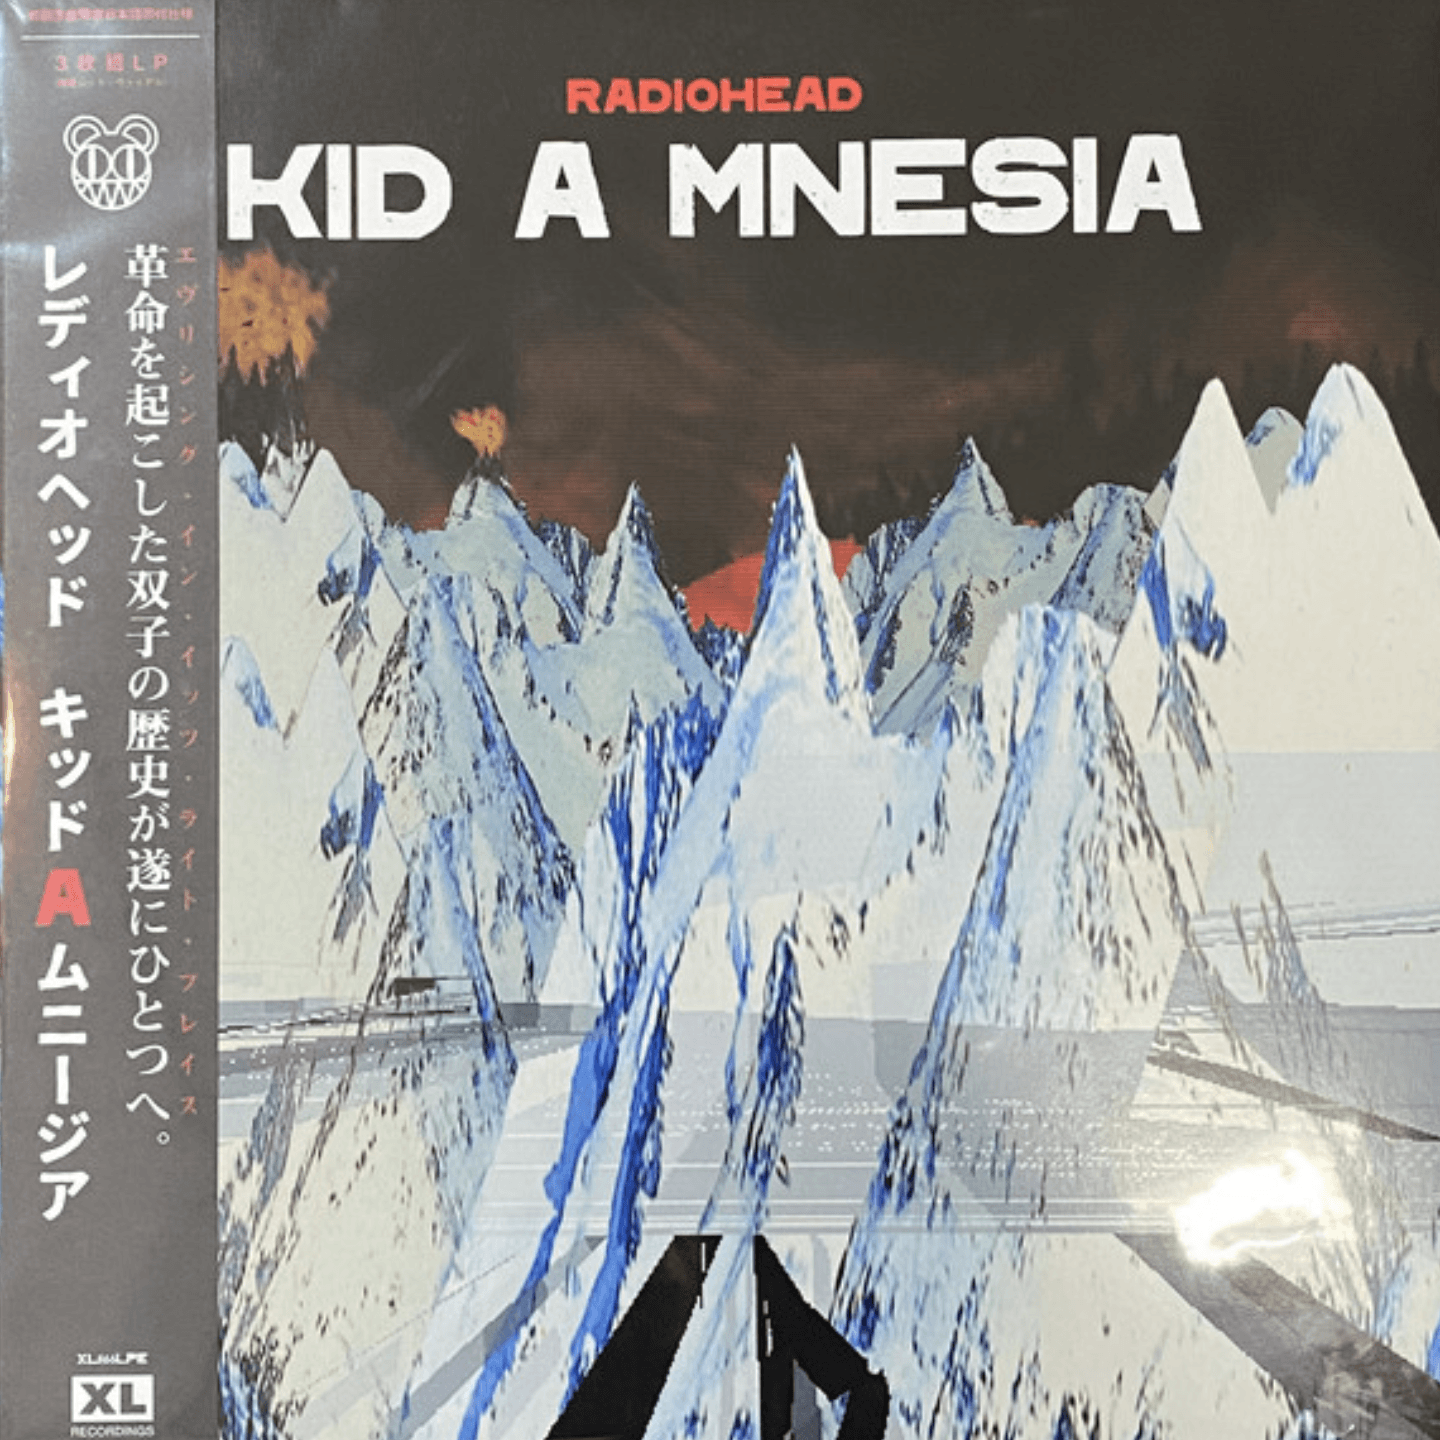 RADIOHEAD - Kid A Mnesia 3LP Japan Edition w Obi Strip, Red Vinyl